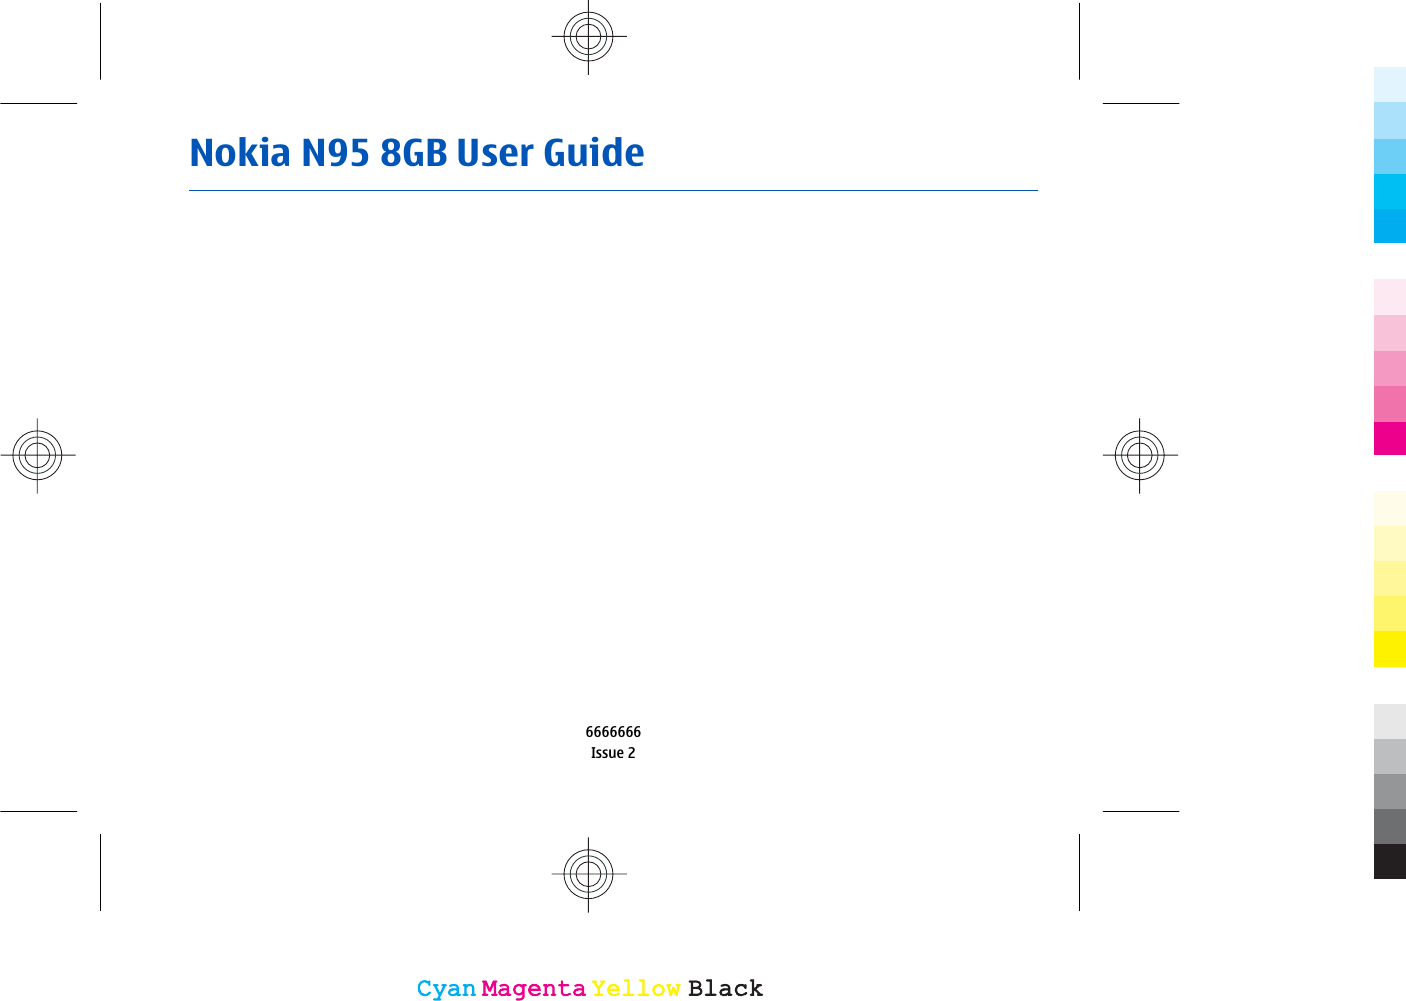 Nokia N95 8GB User Guide6666666Issue 2CyanCyanMagentaMagentaYellowYellowBlackBlack